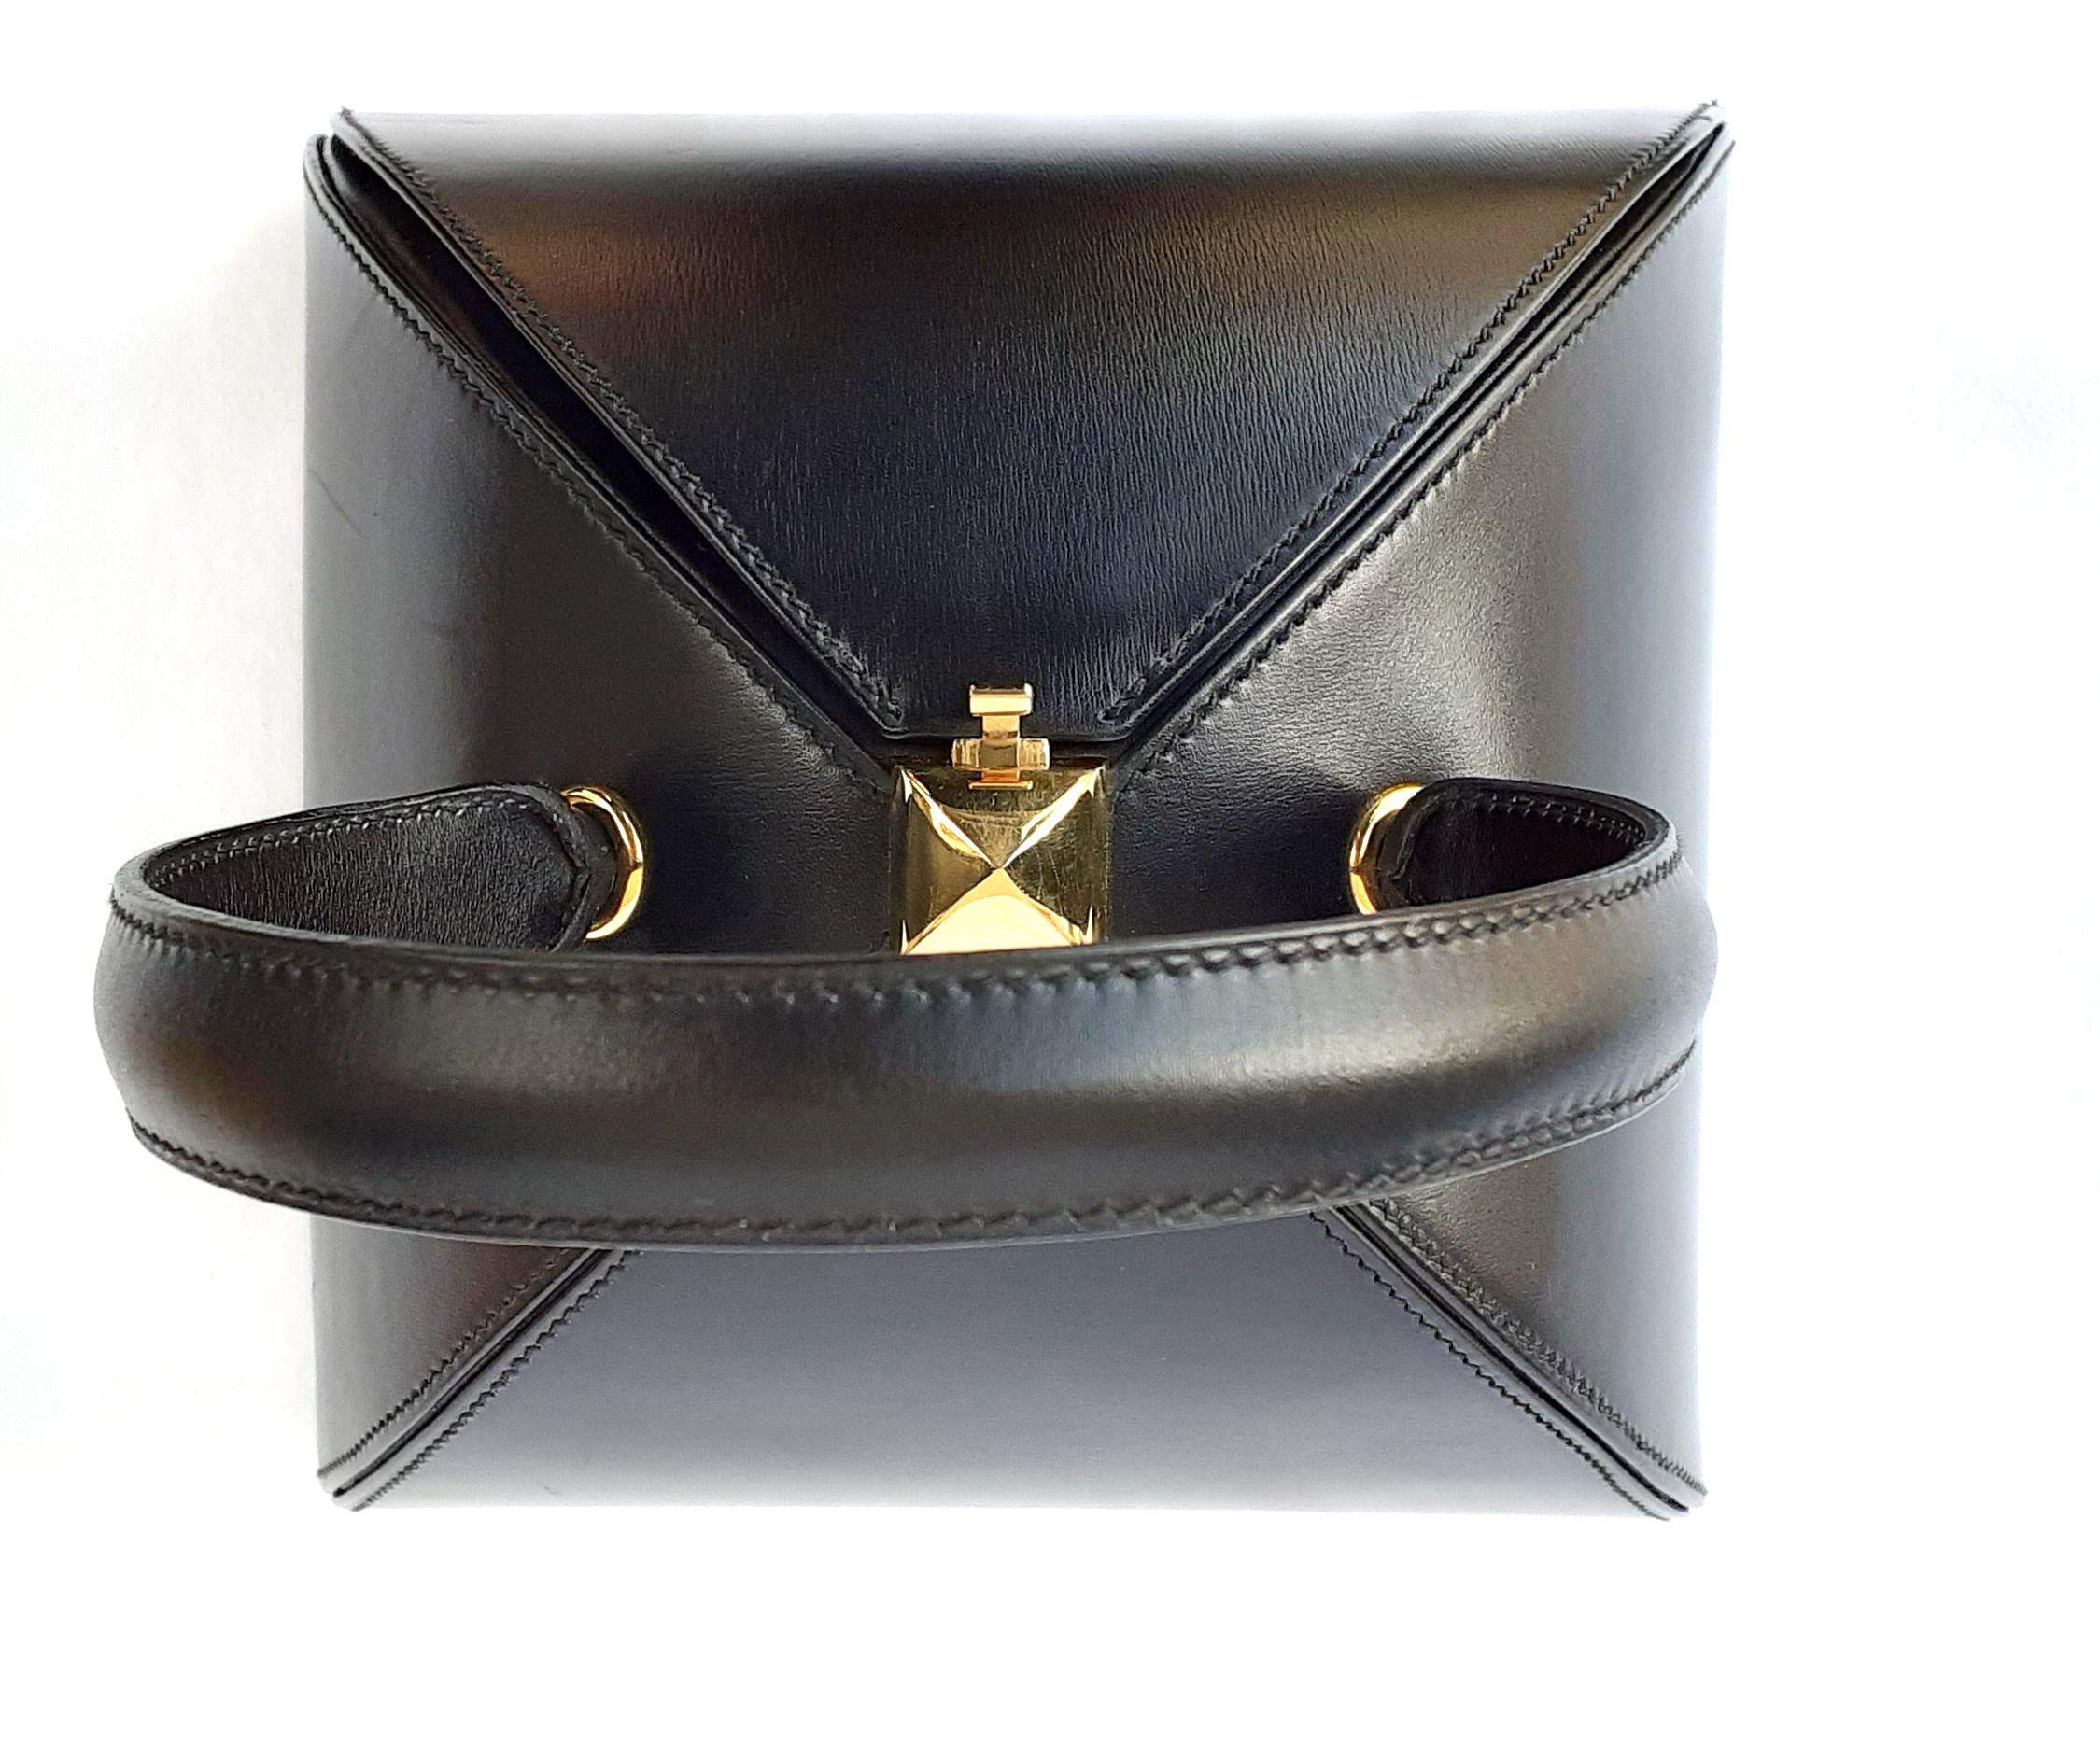 Exceptional Hermès Vintage Tee Time Bag Minaudiere Black Box Leather Ghw RARE 7